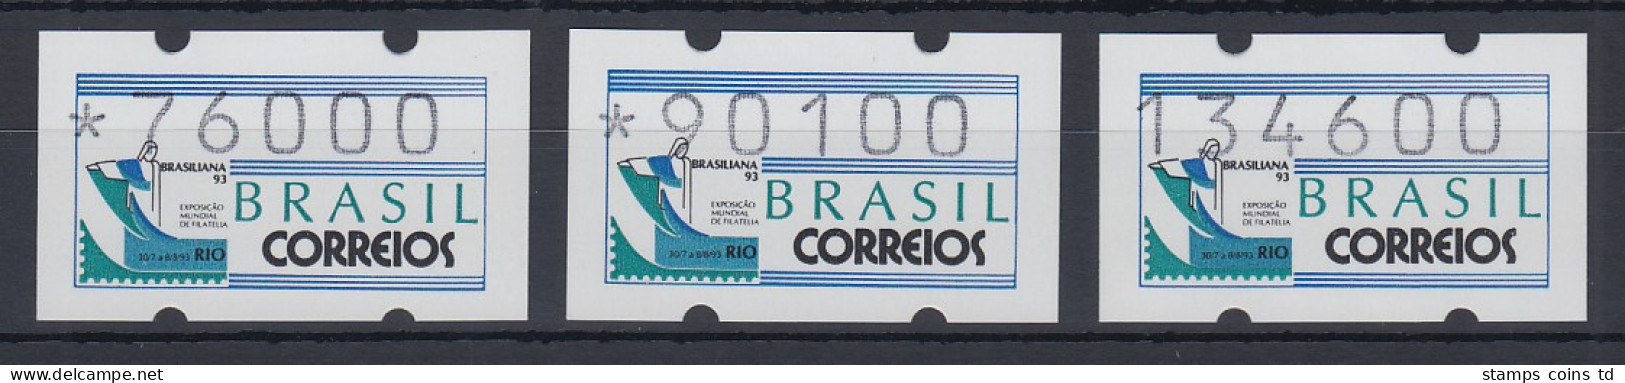 Brasilien Klüssendorf-ATM 1993 BRASILIANA Mi-Nr 5 Satz 76000 - 90100 - 134600 ** - Automatenmarken (Frama)